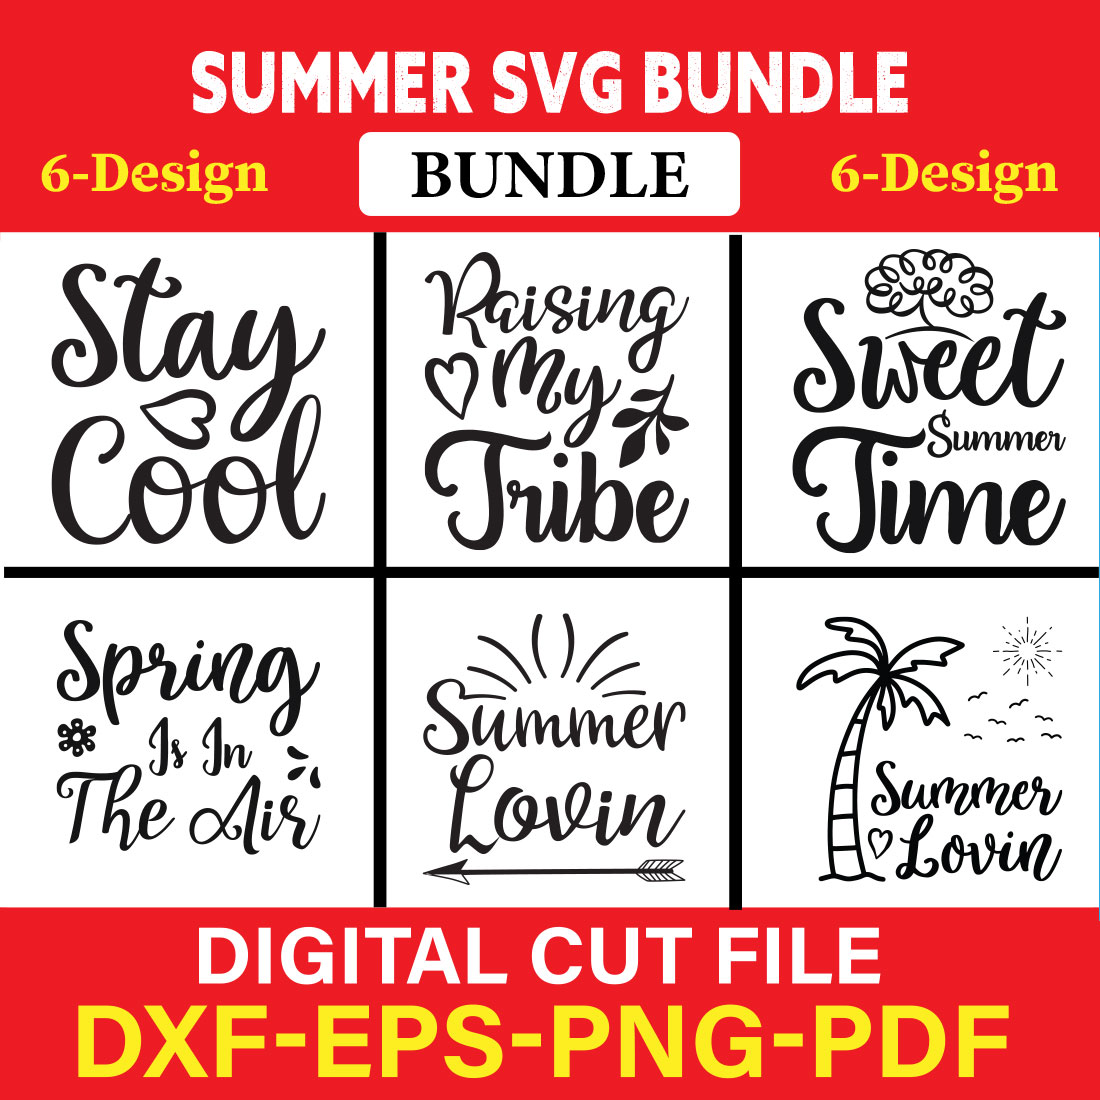 Summer T-shirt Design Bundle Vol-22 cover image.